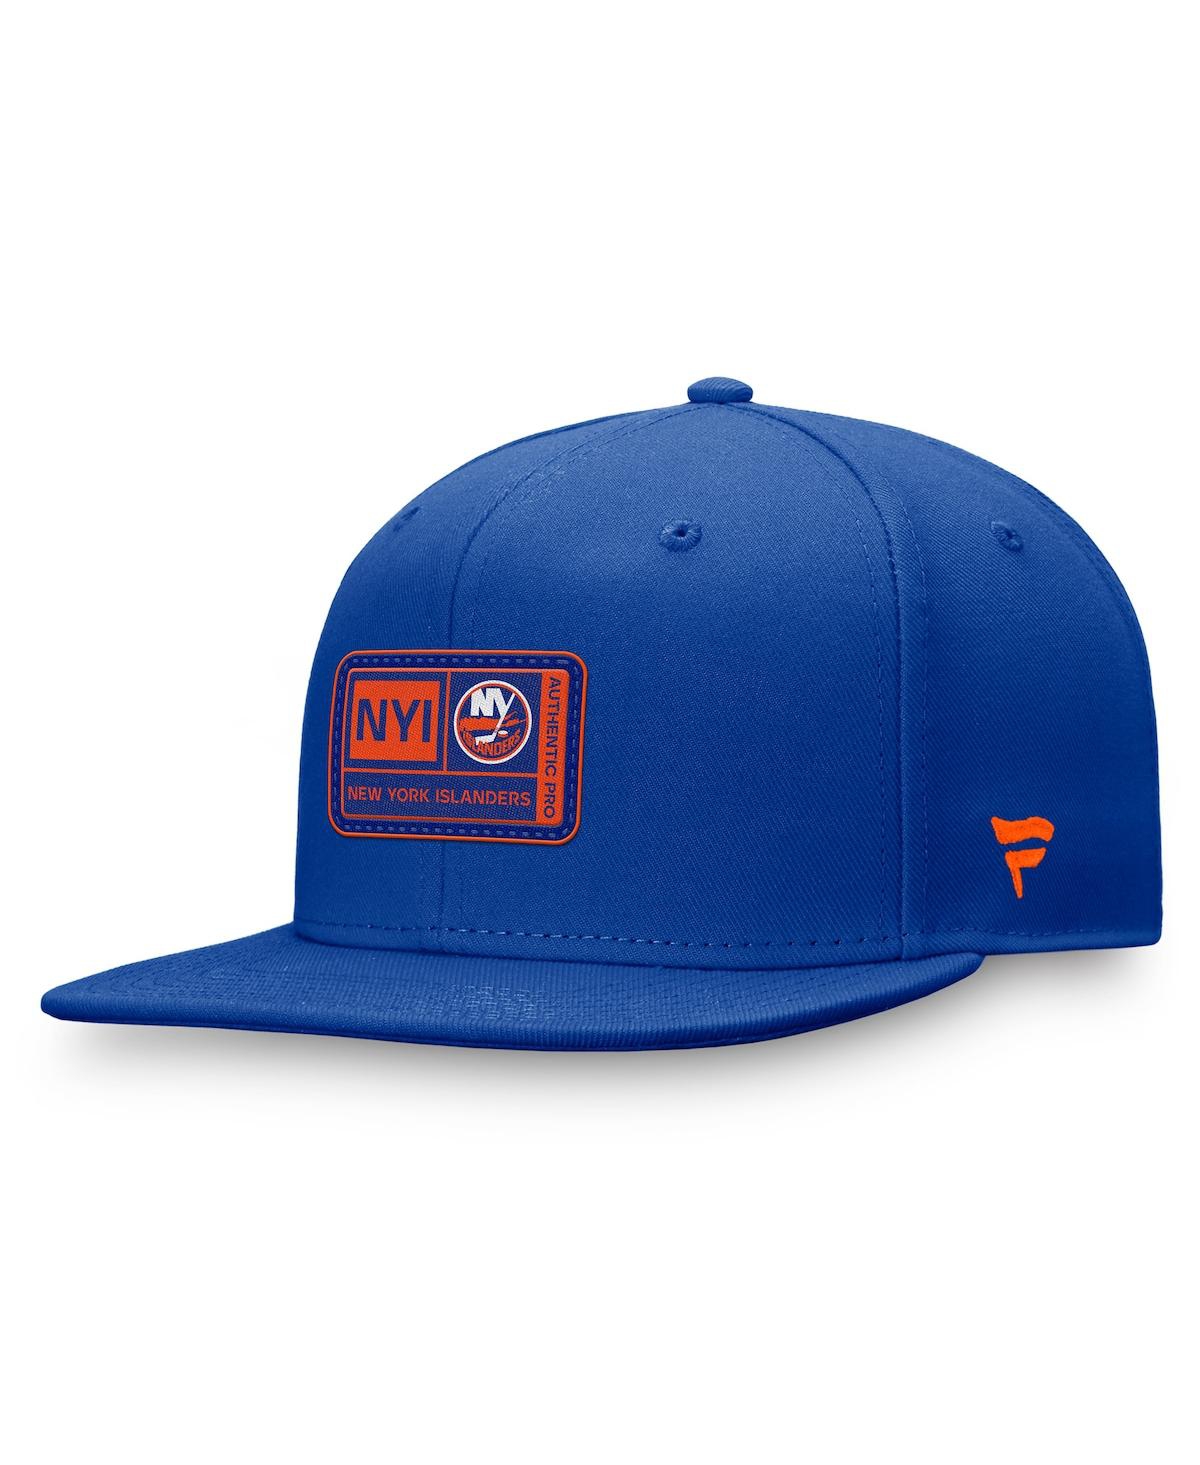 Shop Fanatics Men's  Royal New York Islanders Authentic Pro Training Camp Snapback Hat